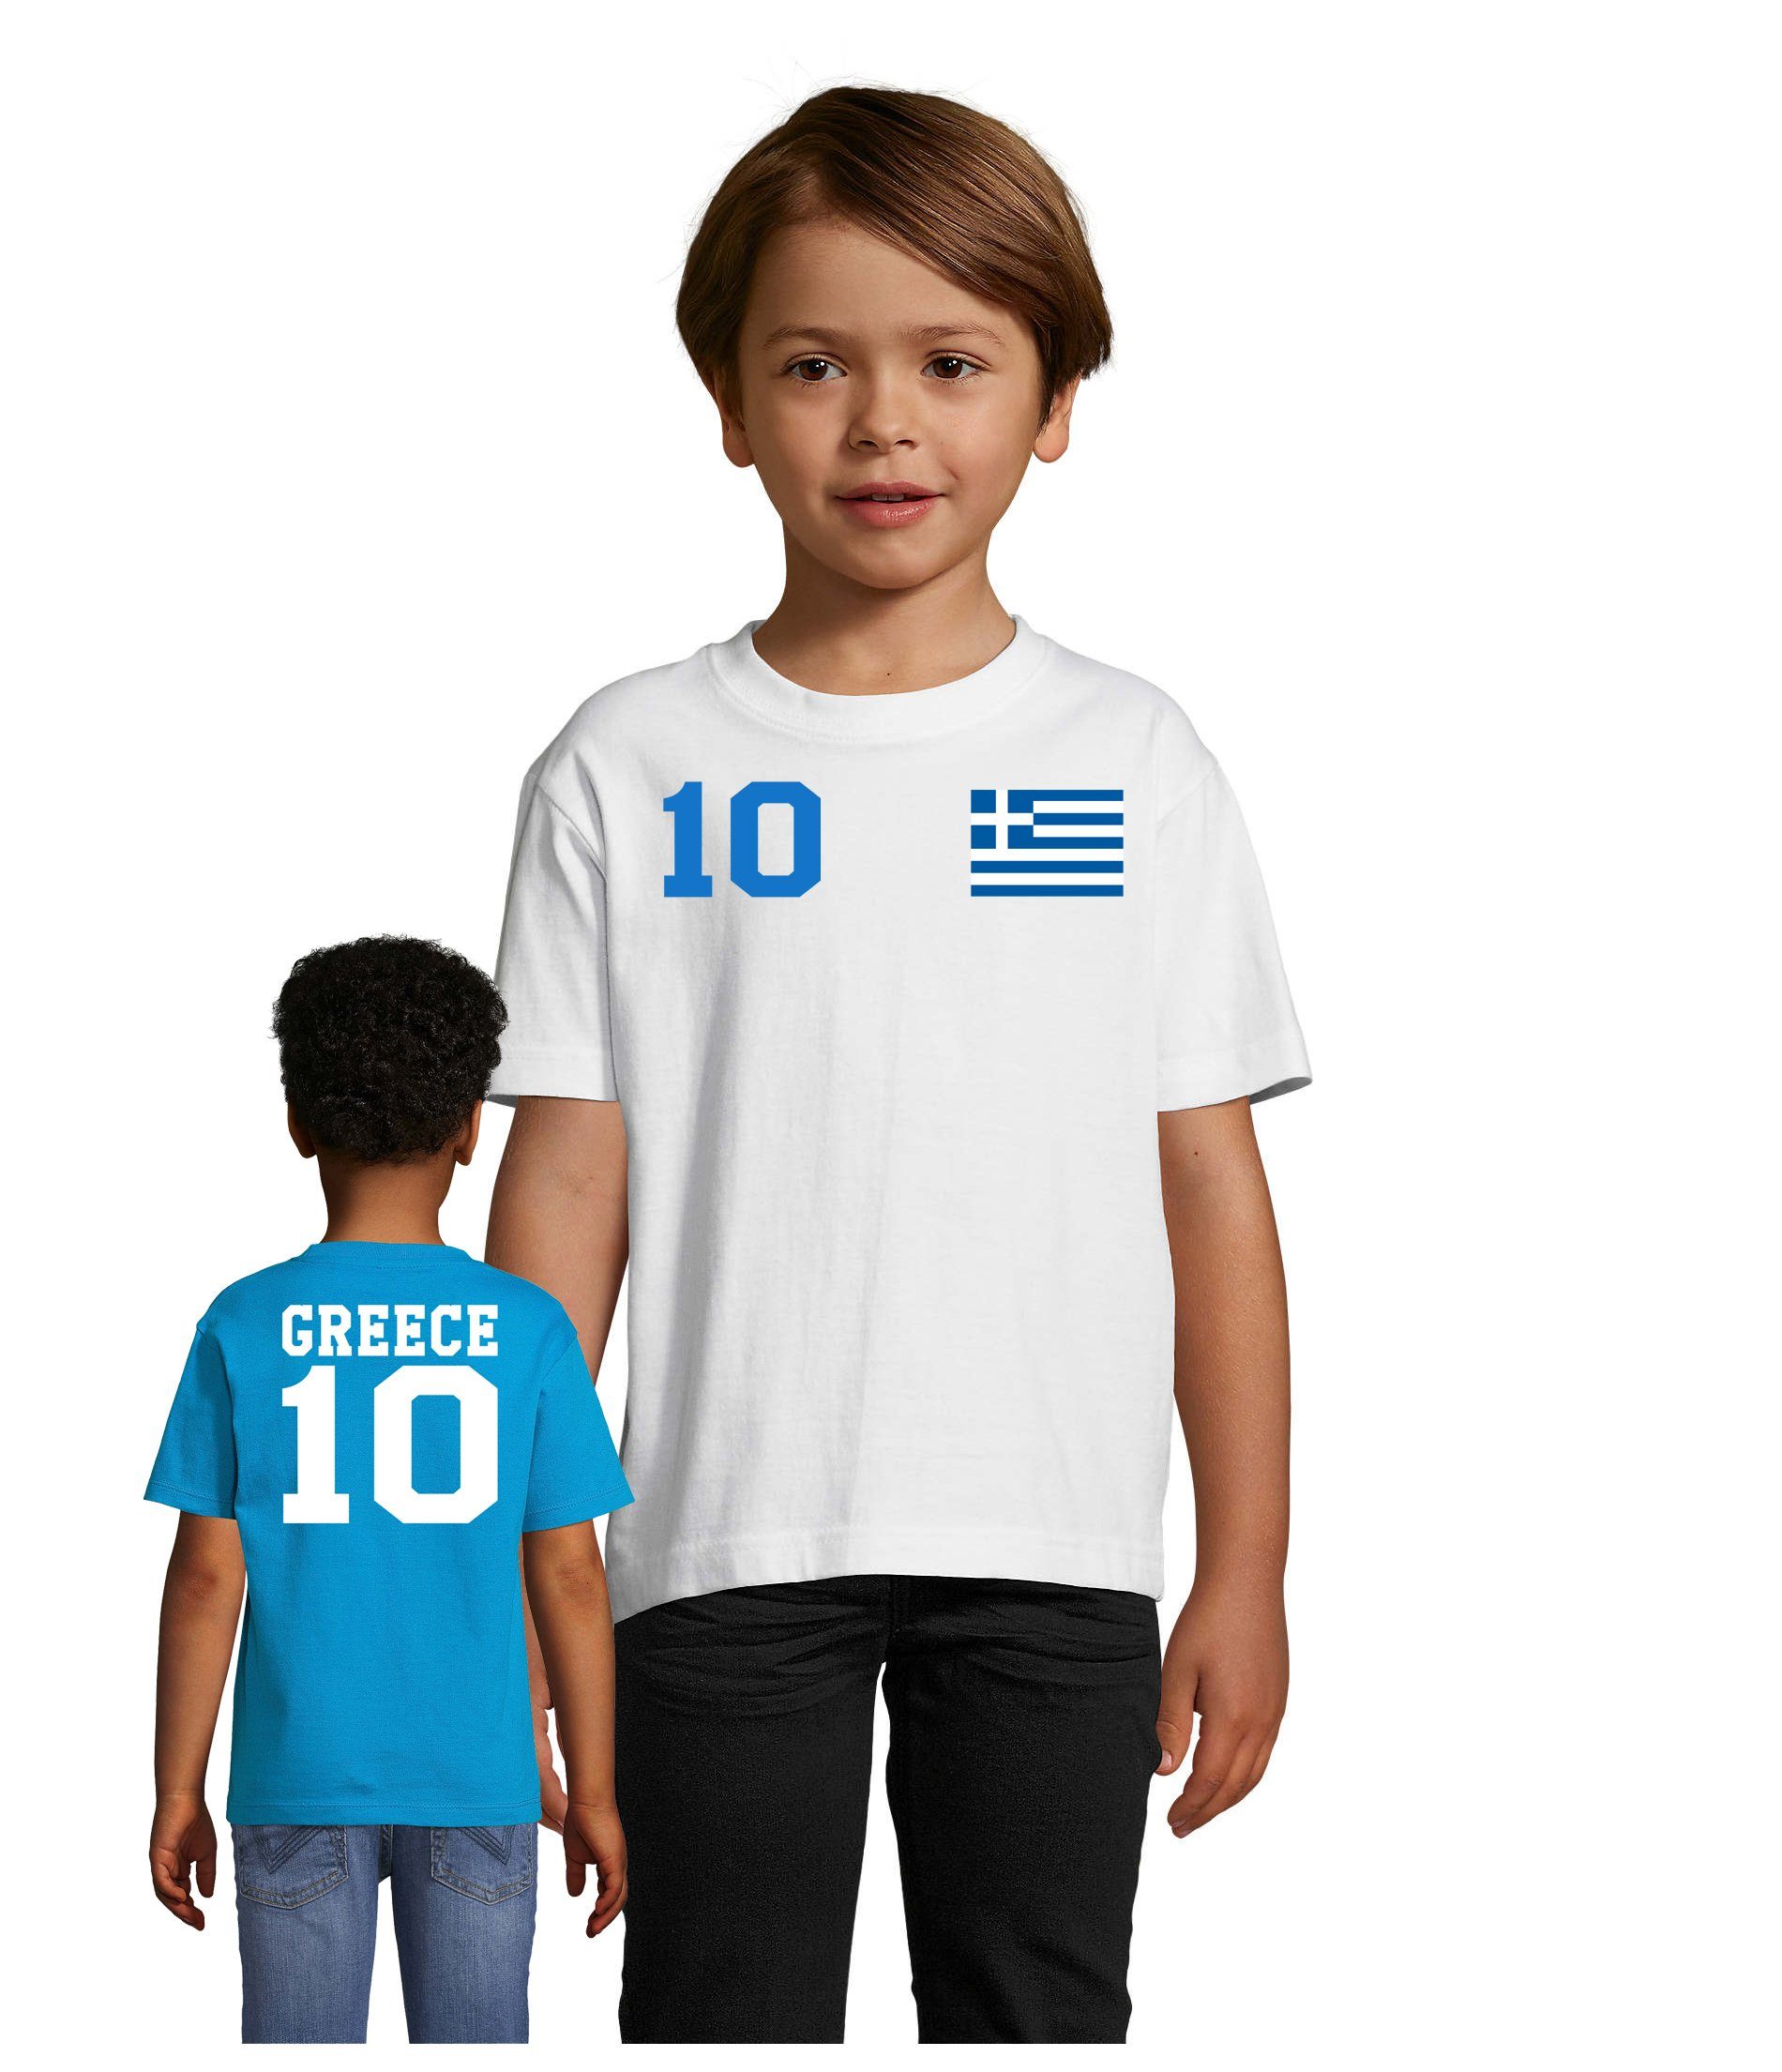 Blondie & Brownie T-Shirt Kinder Griechenland Sport Trikot Fußball Weltmeister Europa EM Blau/Weiss